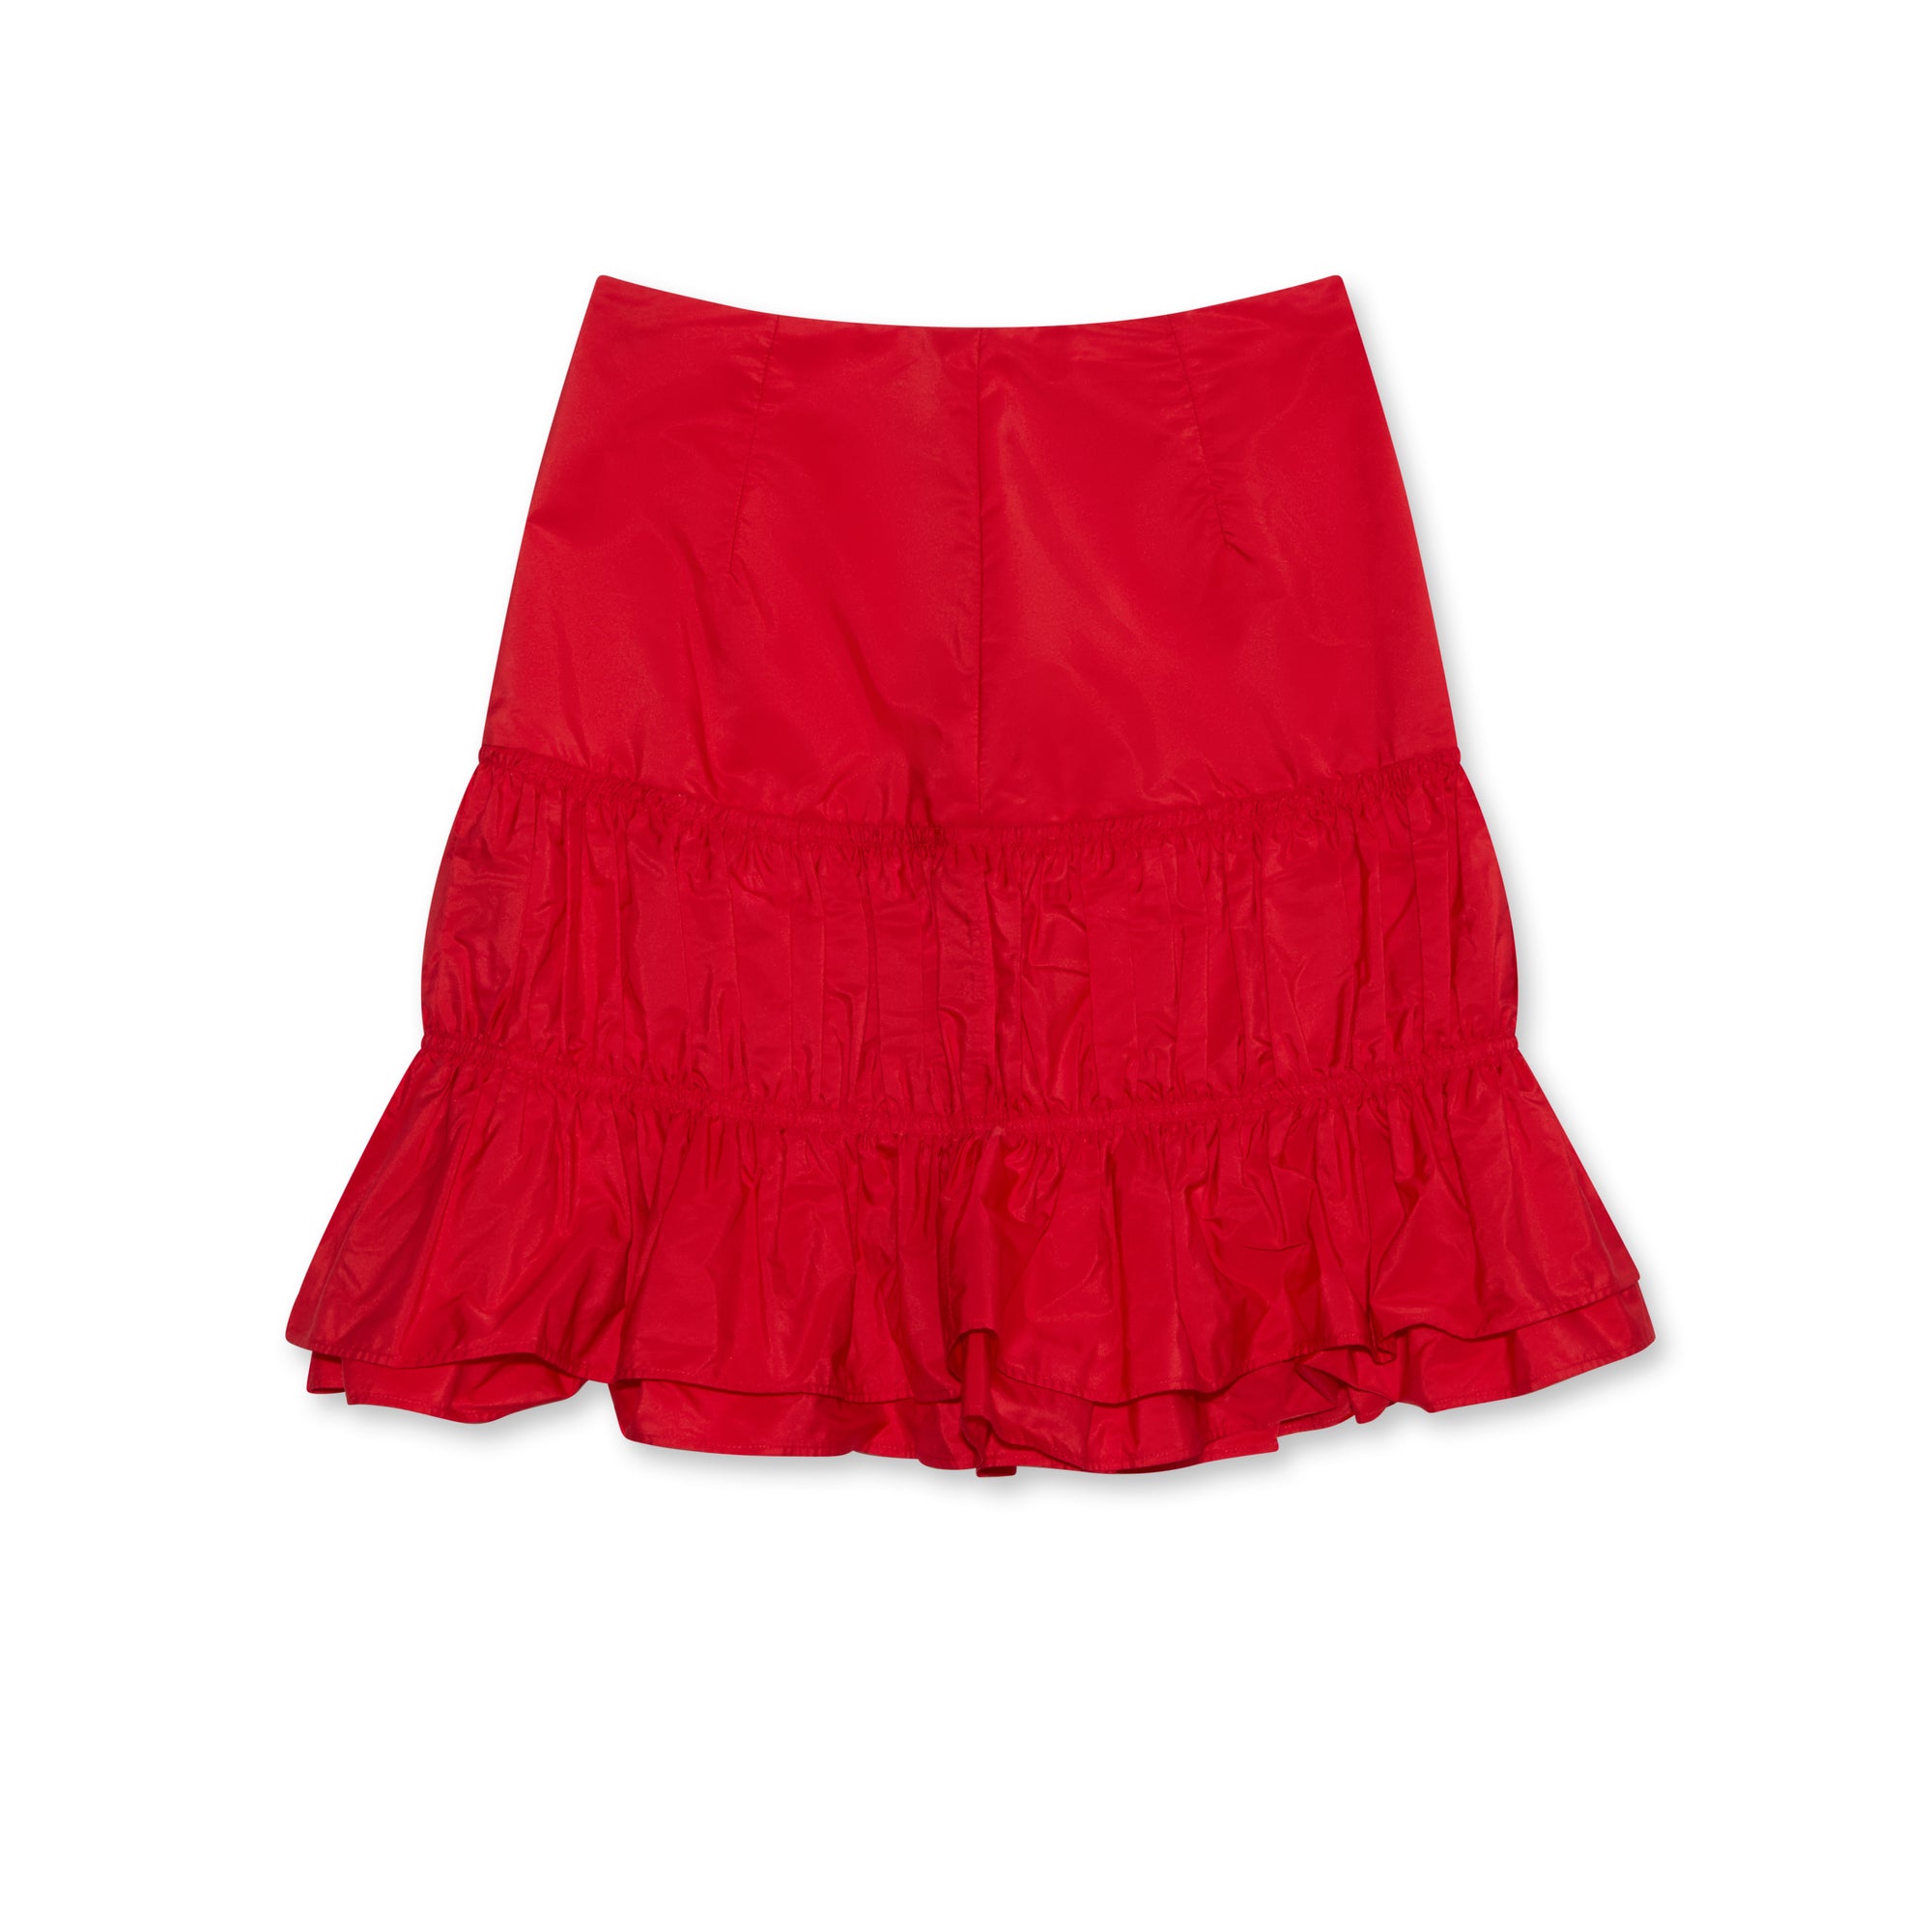 Molly Goddard - Carol Mini Skirt - (Red) view 5